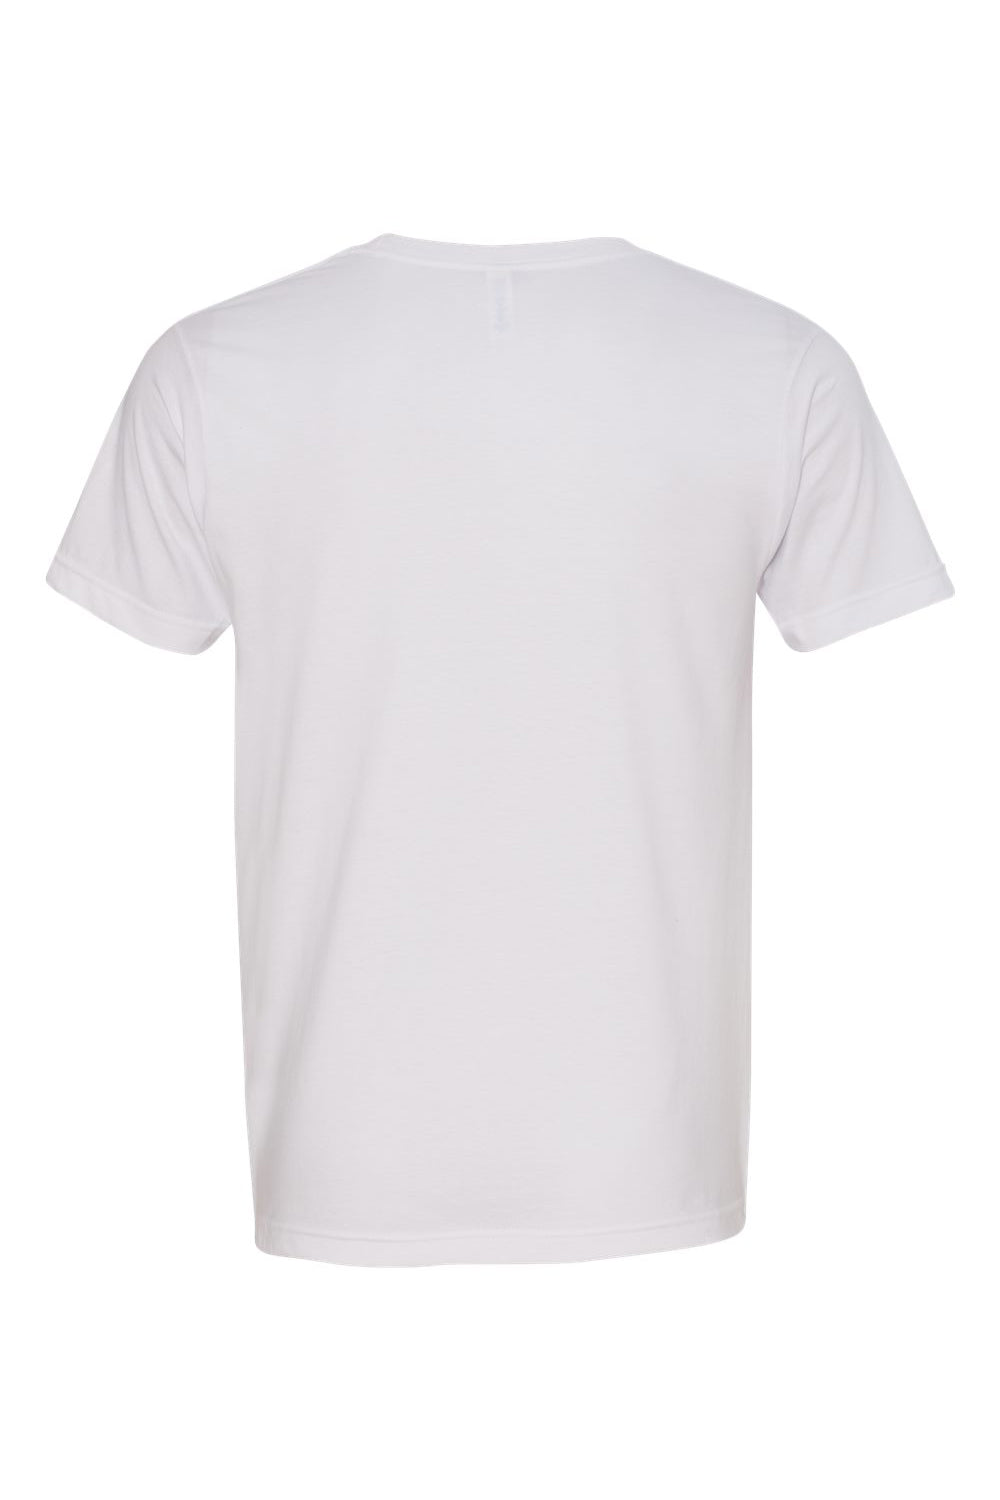 Bayside 5000 Mens USA Made Short Sleeve Crewneck T-Shirt White Flat Back